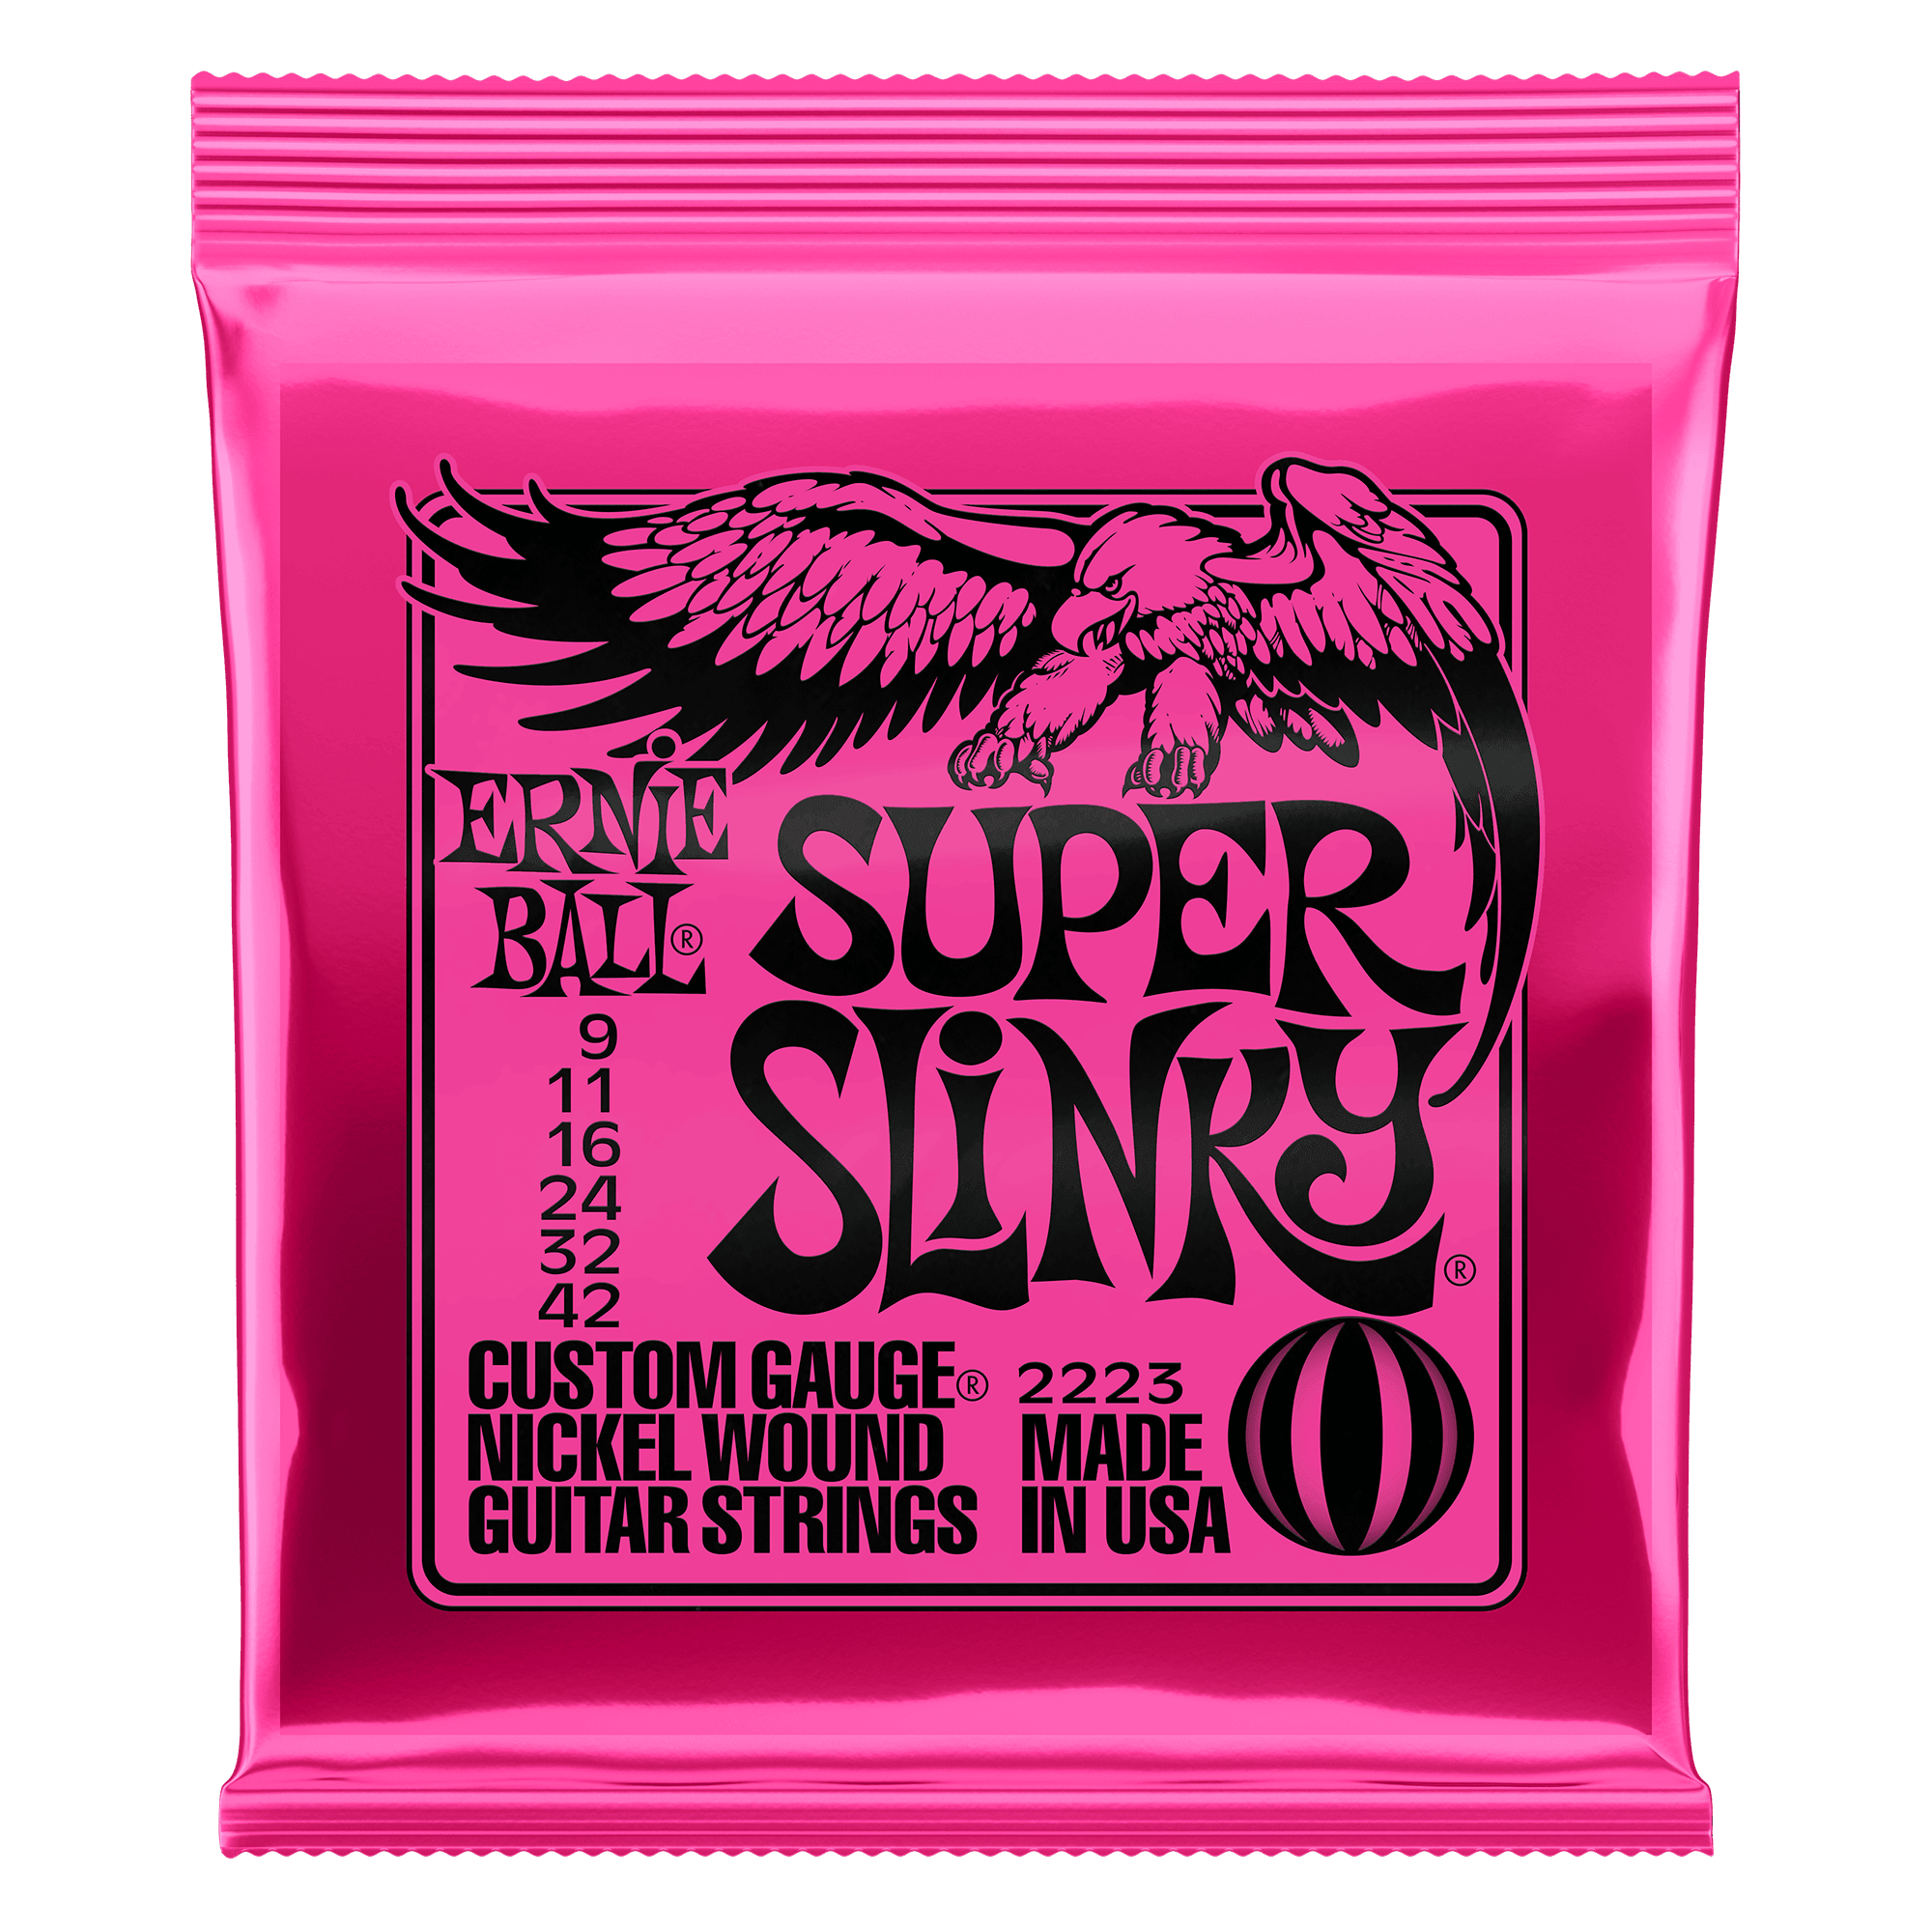 Super Slinky 09-42 Electric Guitar Strings Set Nickel Wound 2223 - Strings - Electric Guitar by Ernie Ball at Muso's Stuff